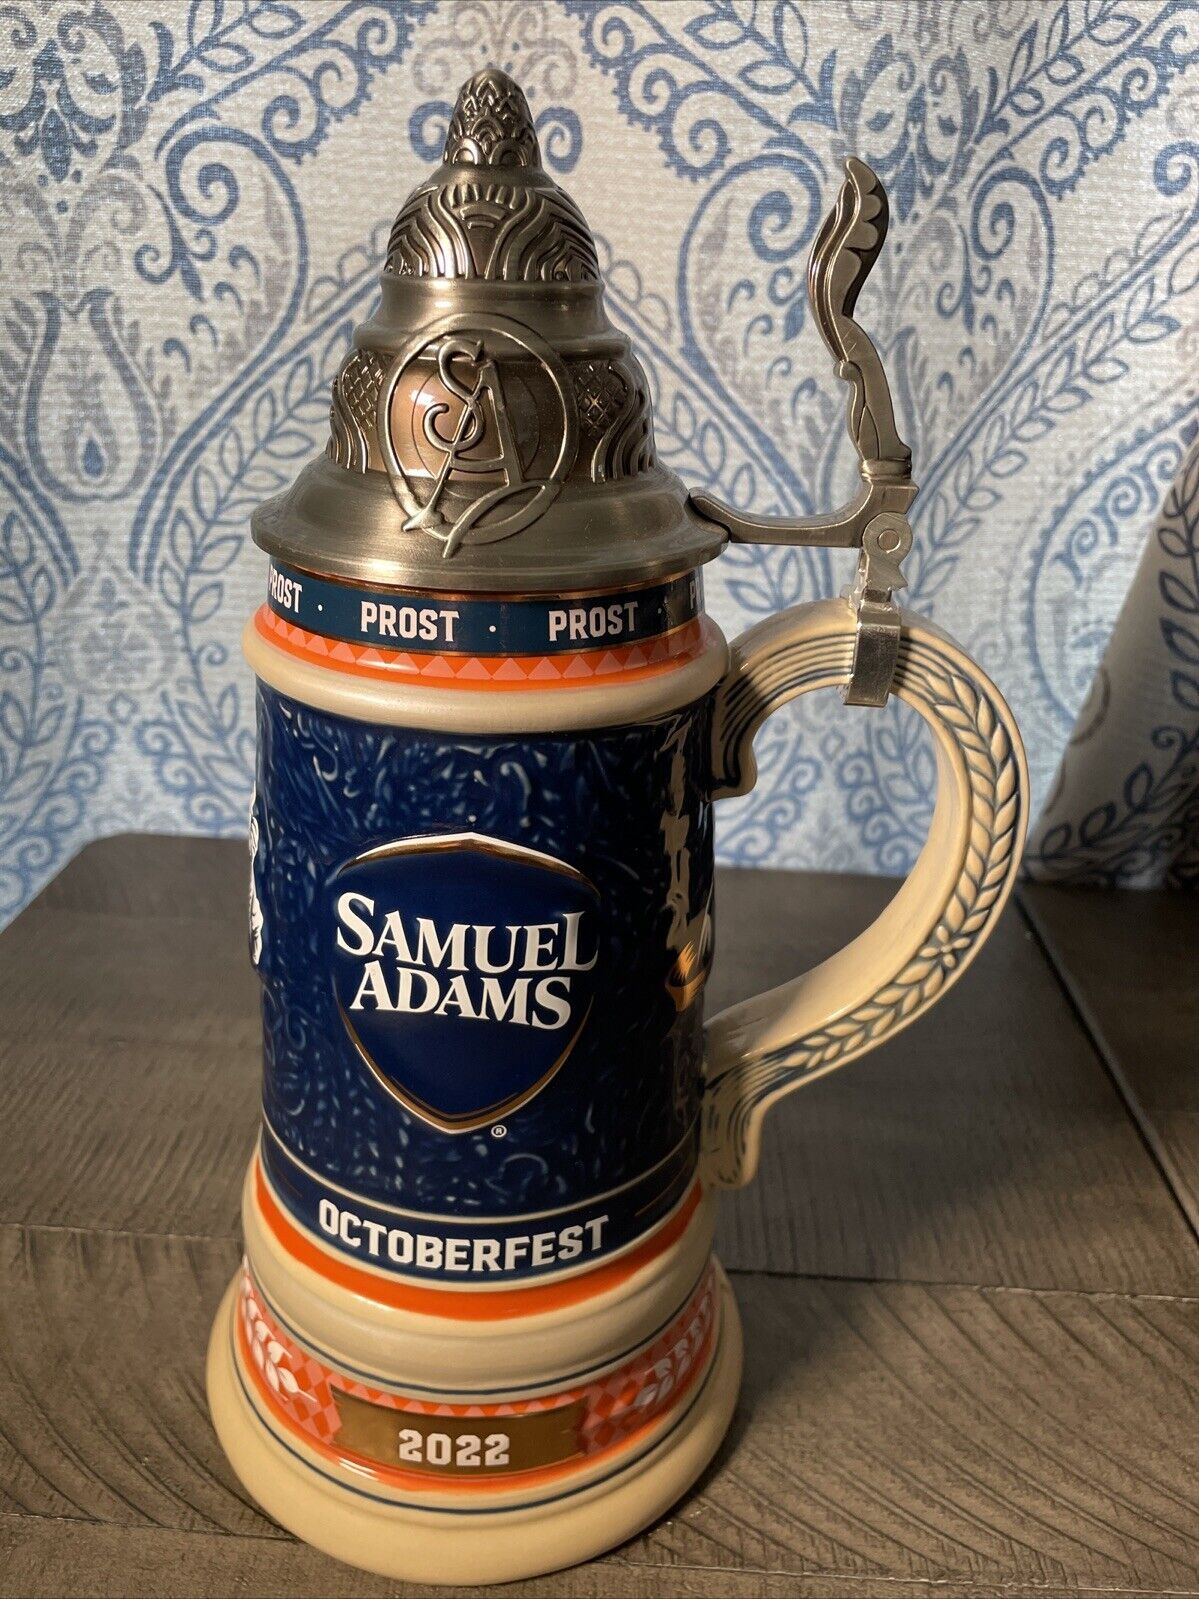 Samuel Sam Adams 2022 Octoberfest Beer Stein Mug Limited Edition #2078 Prost NEW